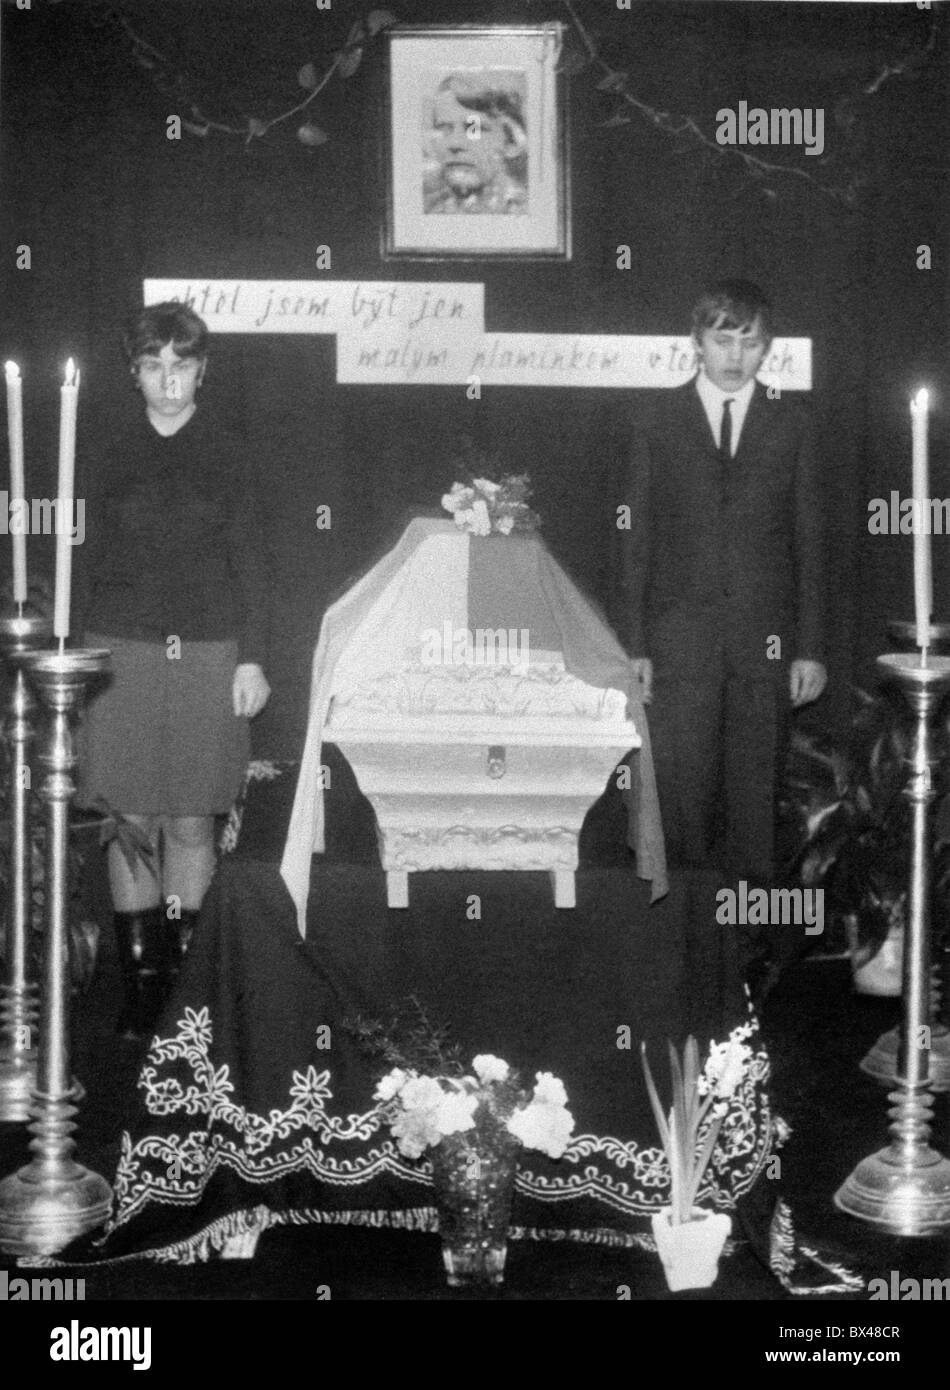 Jan Zajic, funeral, casket, coffin Stock Photo